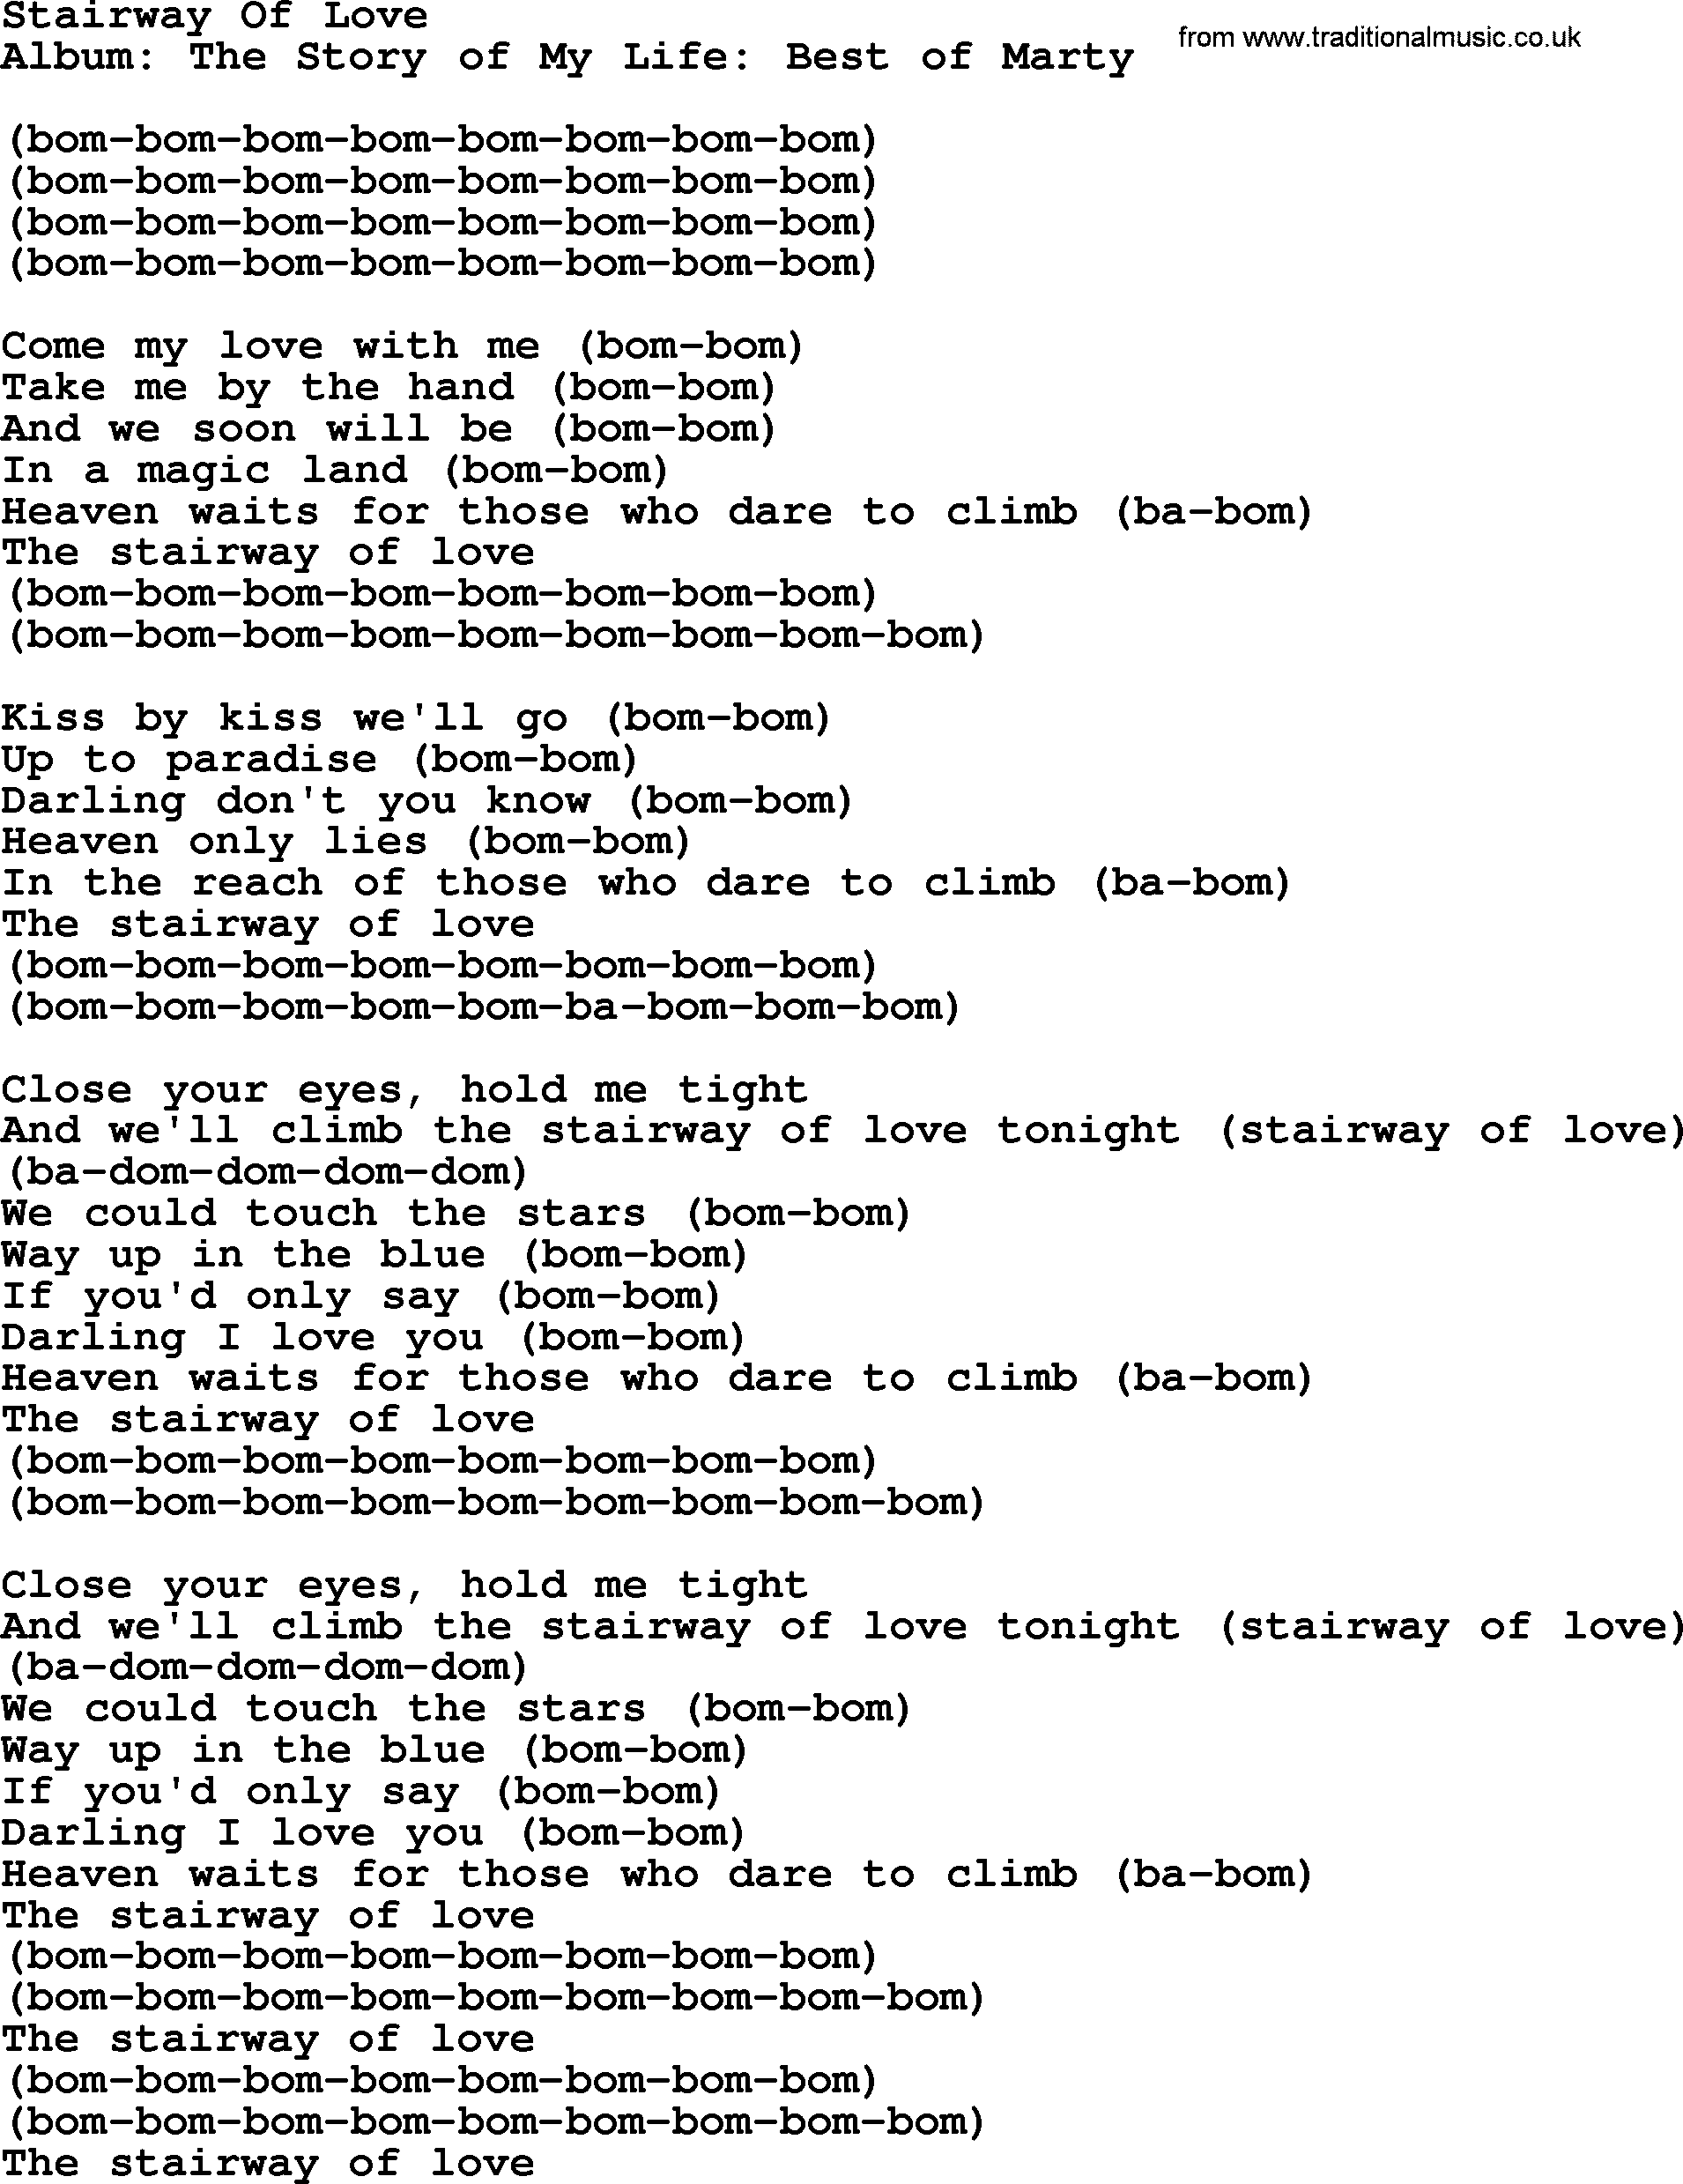 Marty Robbins song: Stairway Of Love, lyrics